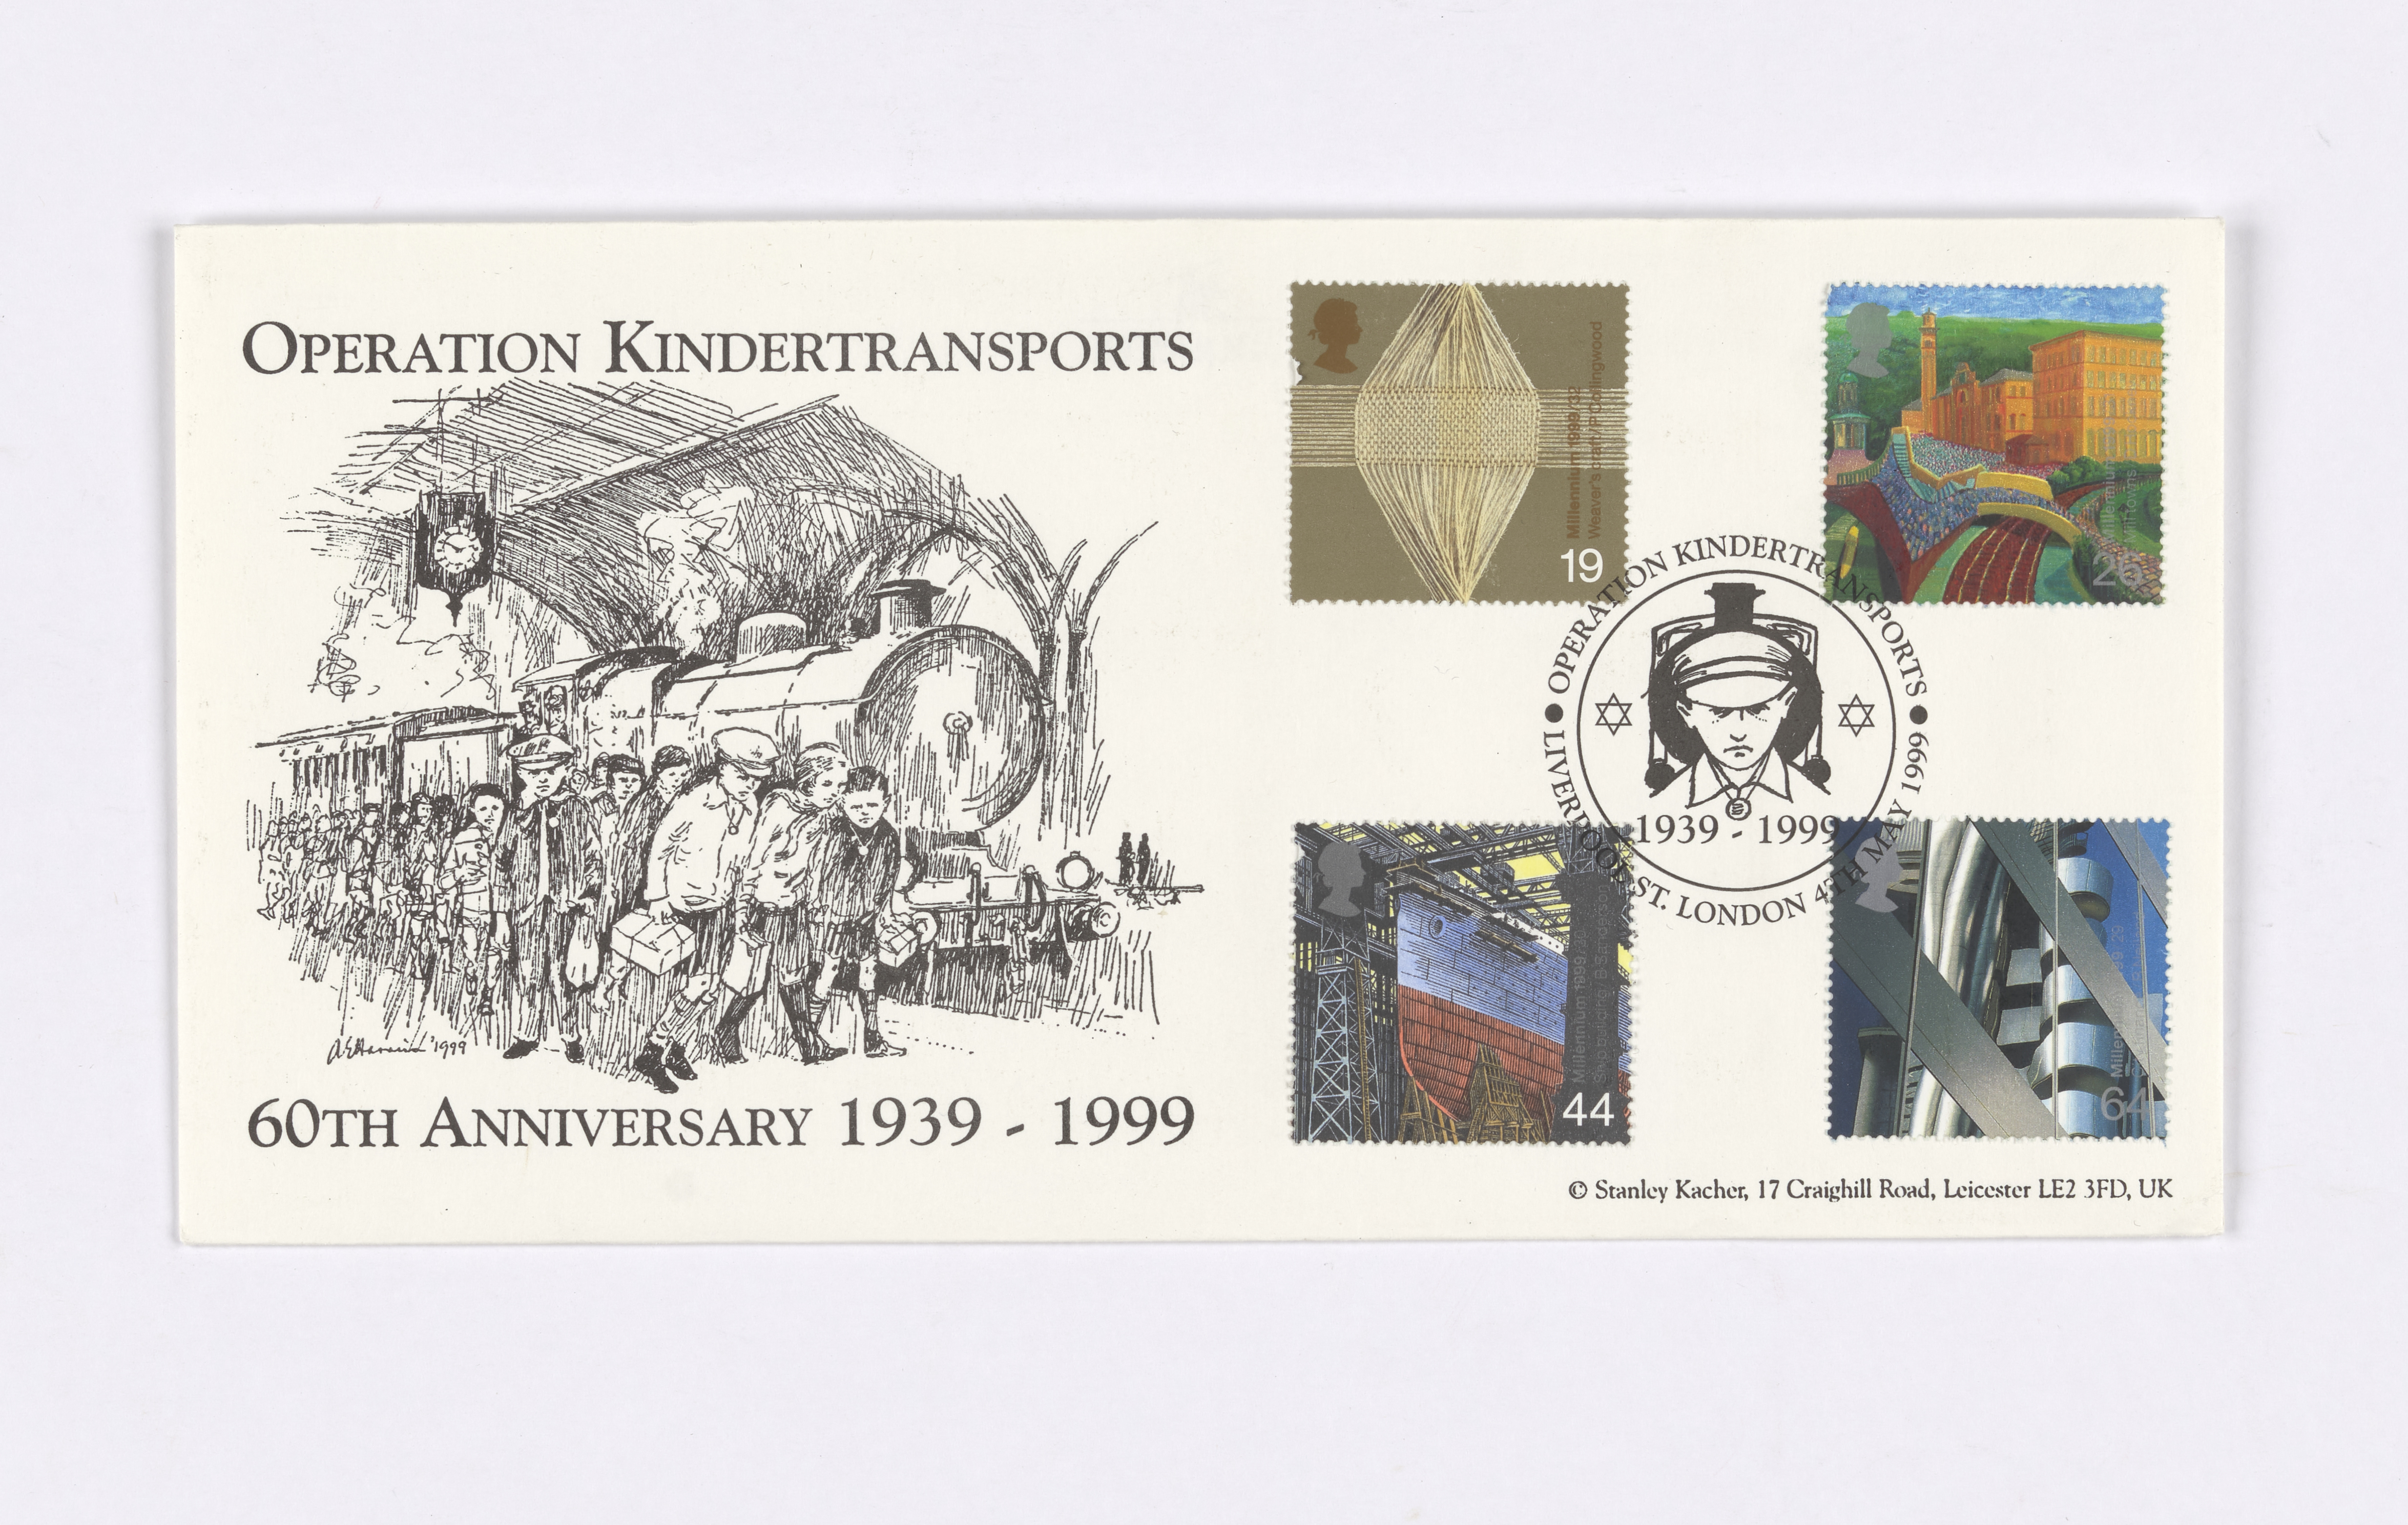 Commemorative envelope showing stamps relating to the Kindertransport